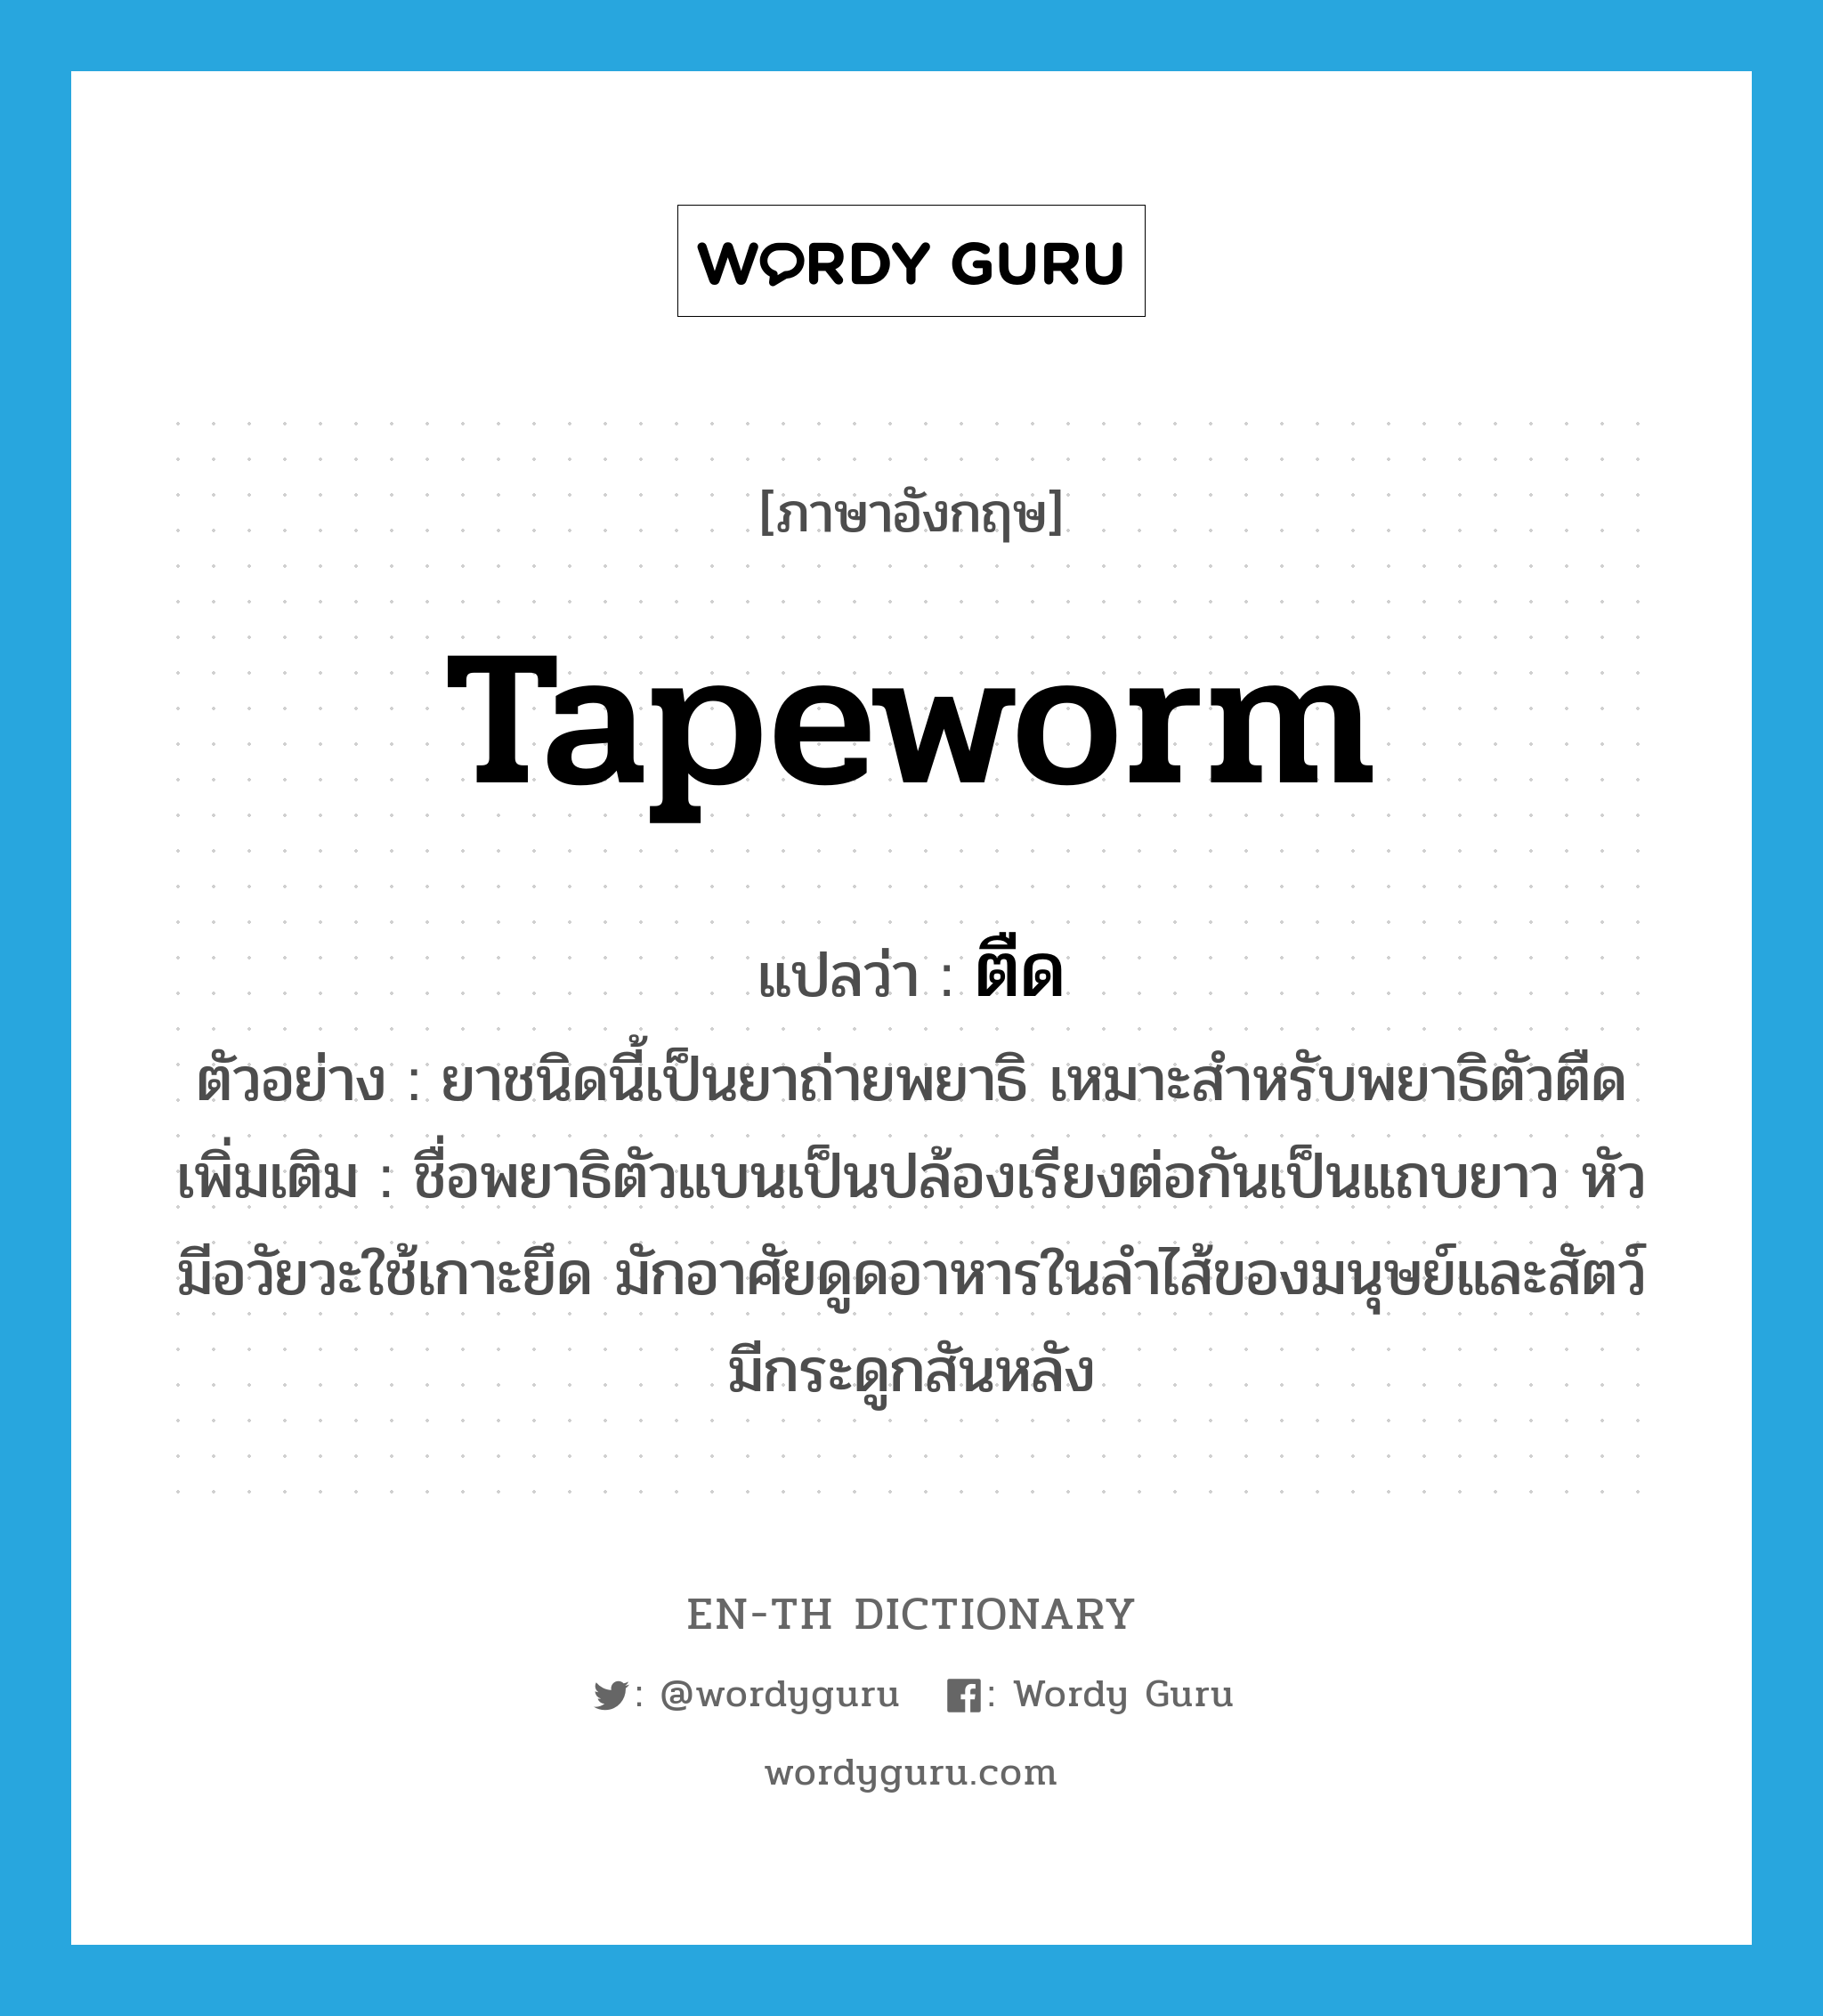 tapeworm แปลว่า?, คำศัพท์ภาษาอังกฤษ tapeworm แปลว่า ตืด ประเภท N ตัวอย่าง ยาชนิดนี้เป็นยาถ่ายพยาธิ เหมาะสำหรับพยาธิตัวตืด เพิ่มเติม ชื่อพยาธิตัวแบนเป็นปล้องเรียงต่อกันเป็นแถบยาว หัวมีอวัยวะใช้เกาะยึด มักอาศัยดูดอาหารในลำไส้ของมนุษย์และสัตว์มีกระดูกสันหลัง หมวด N